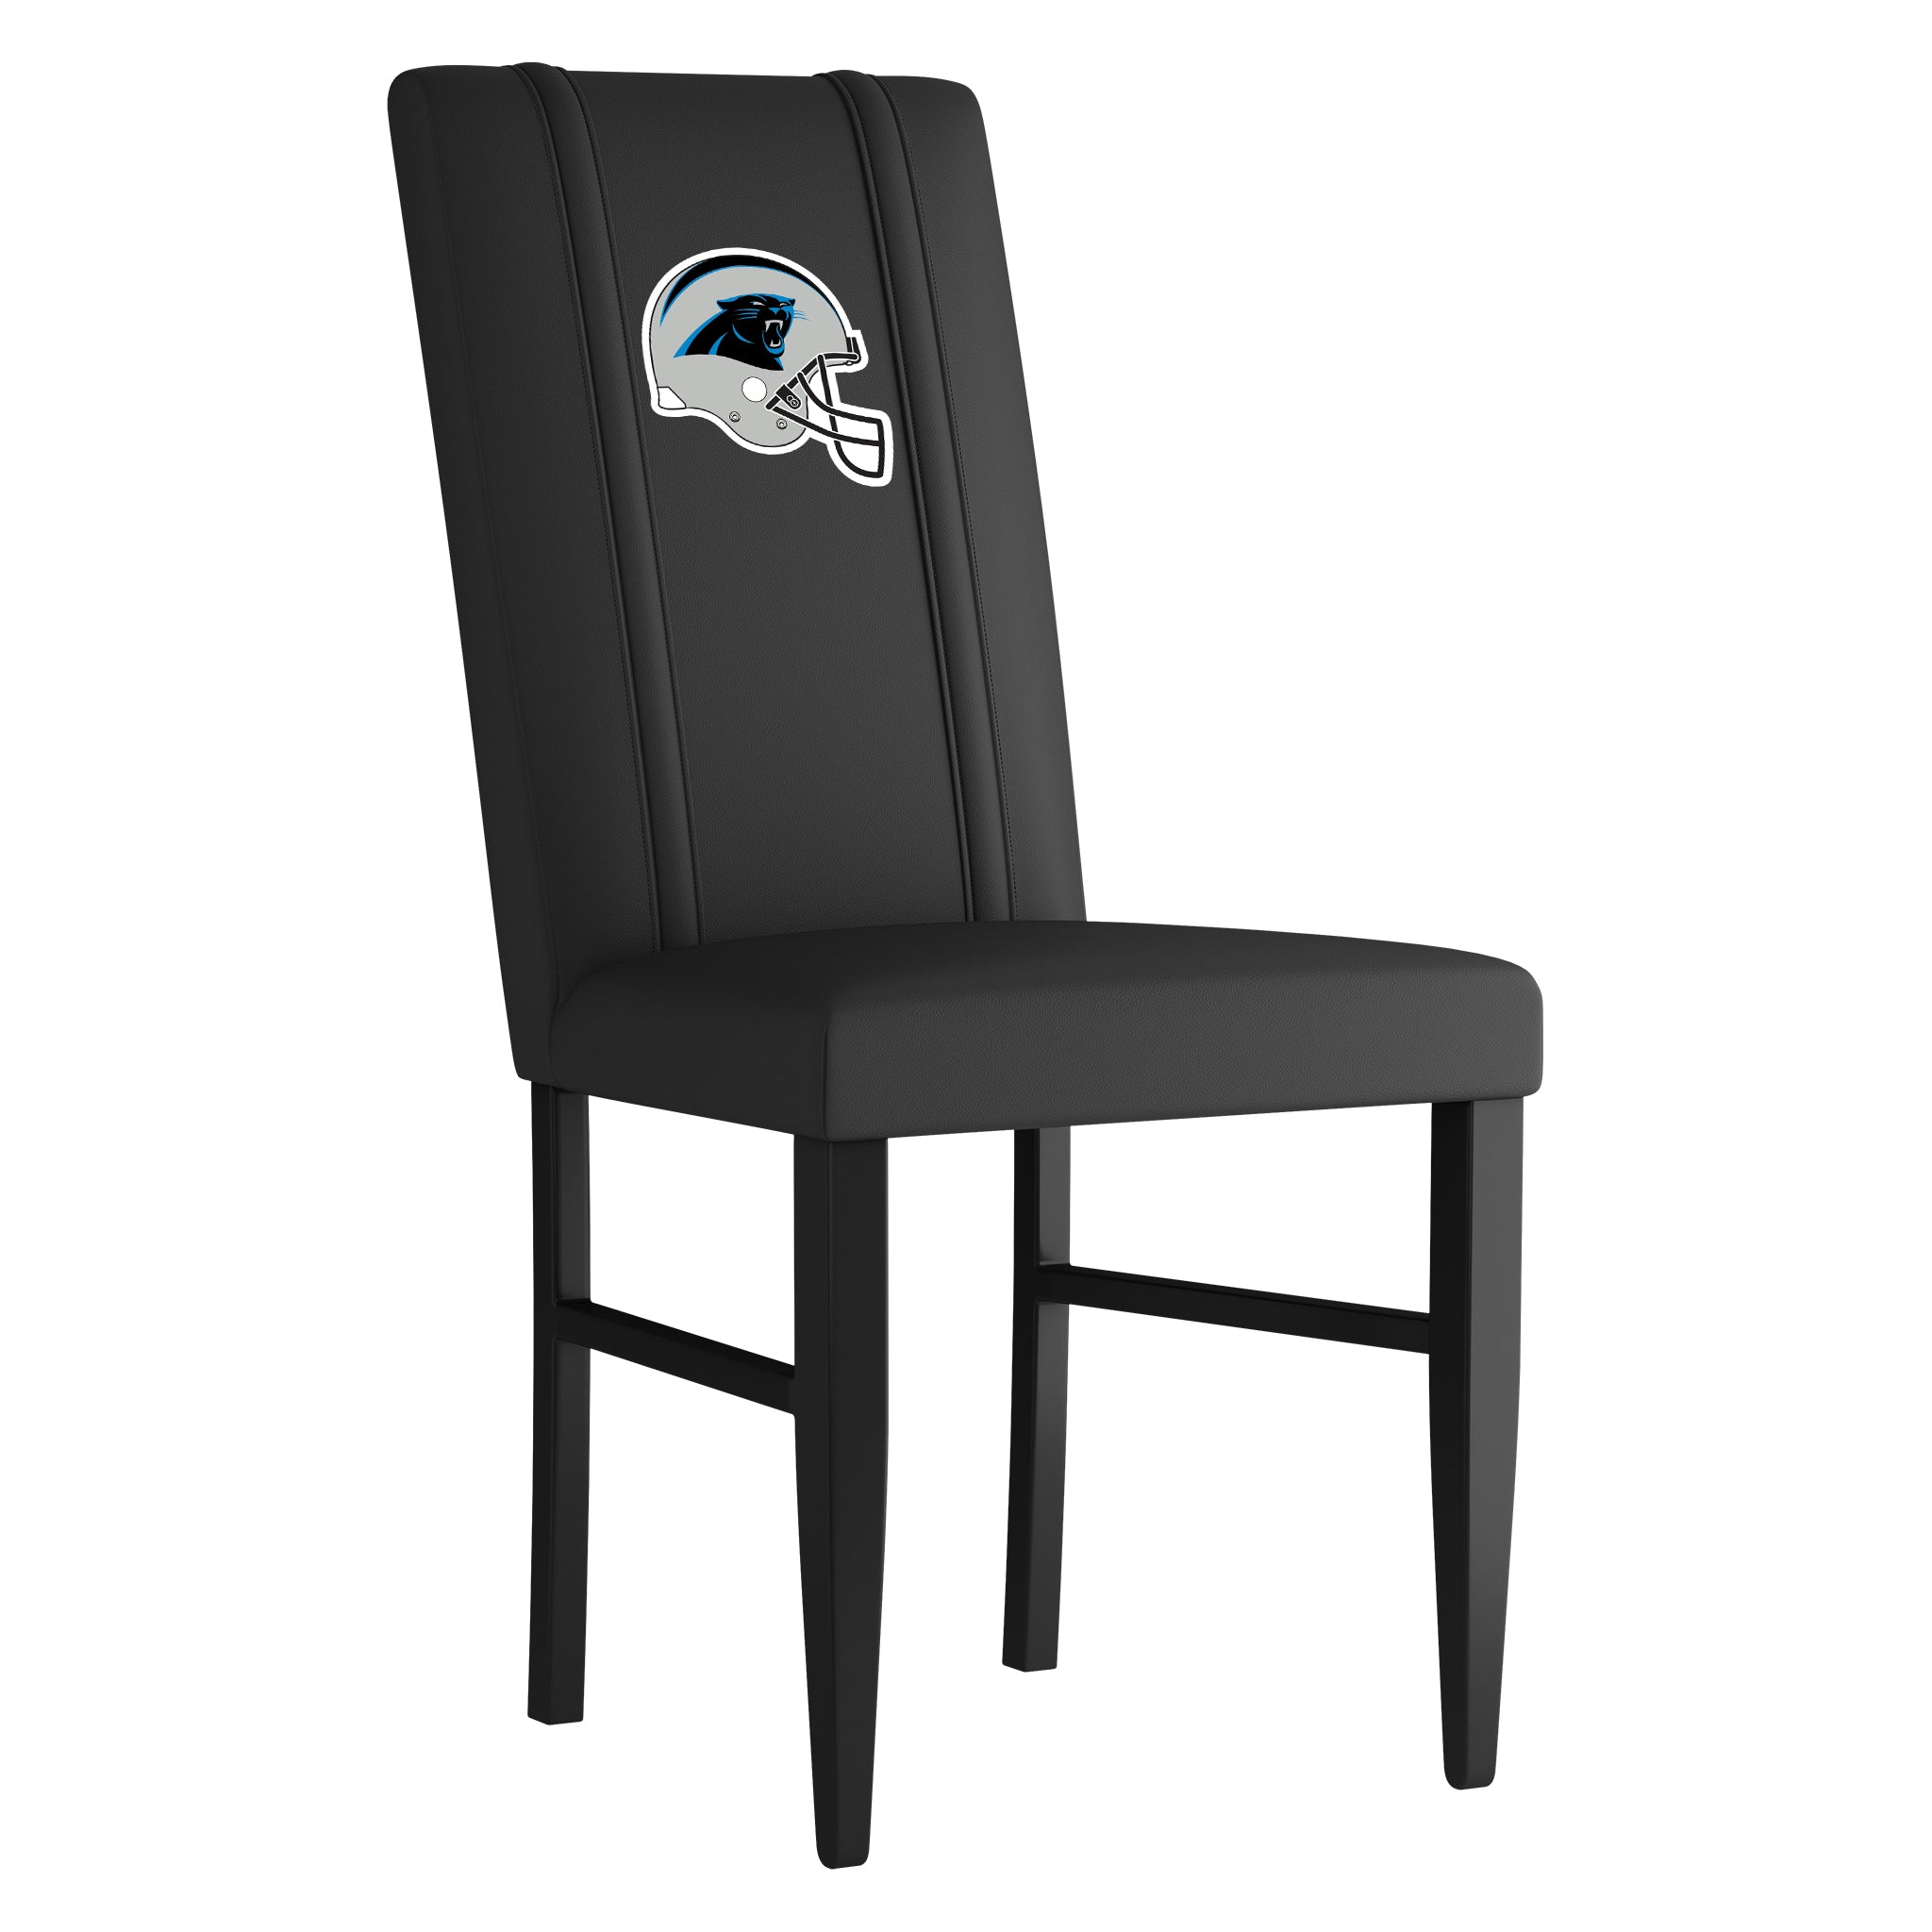 Carolina Panthers Side Chair 2000